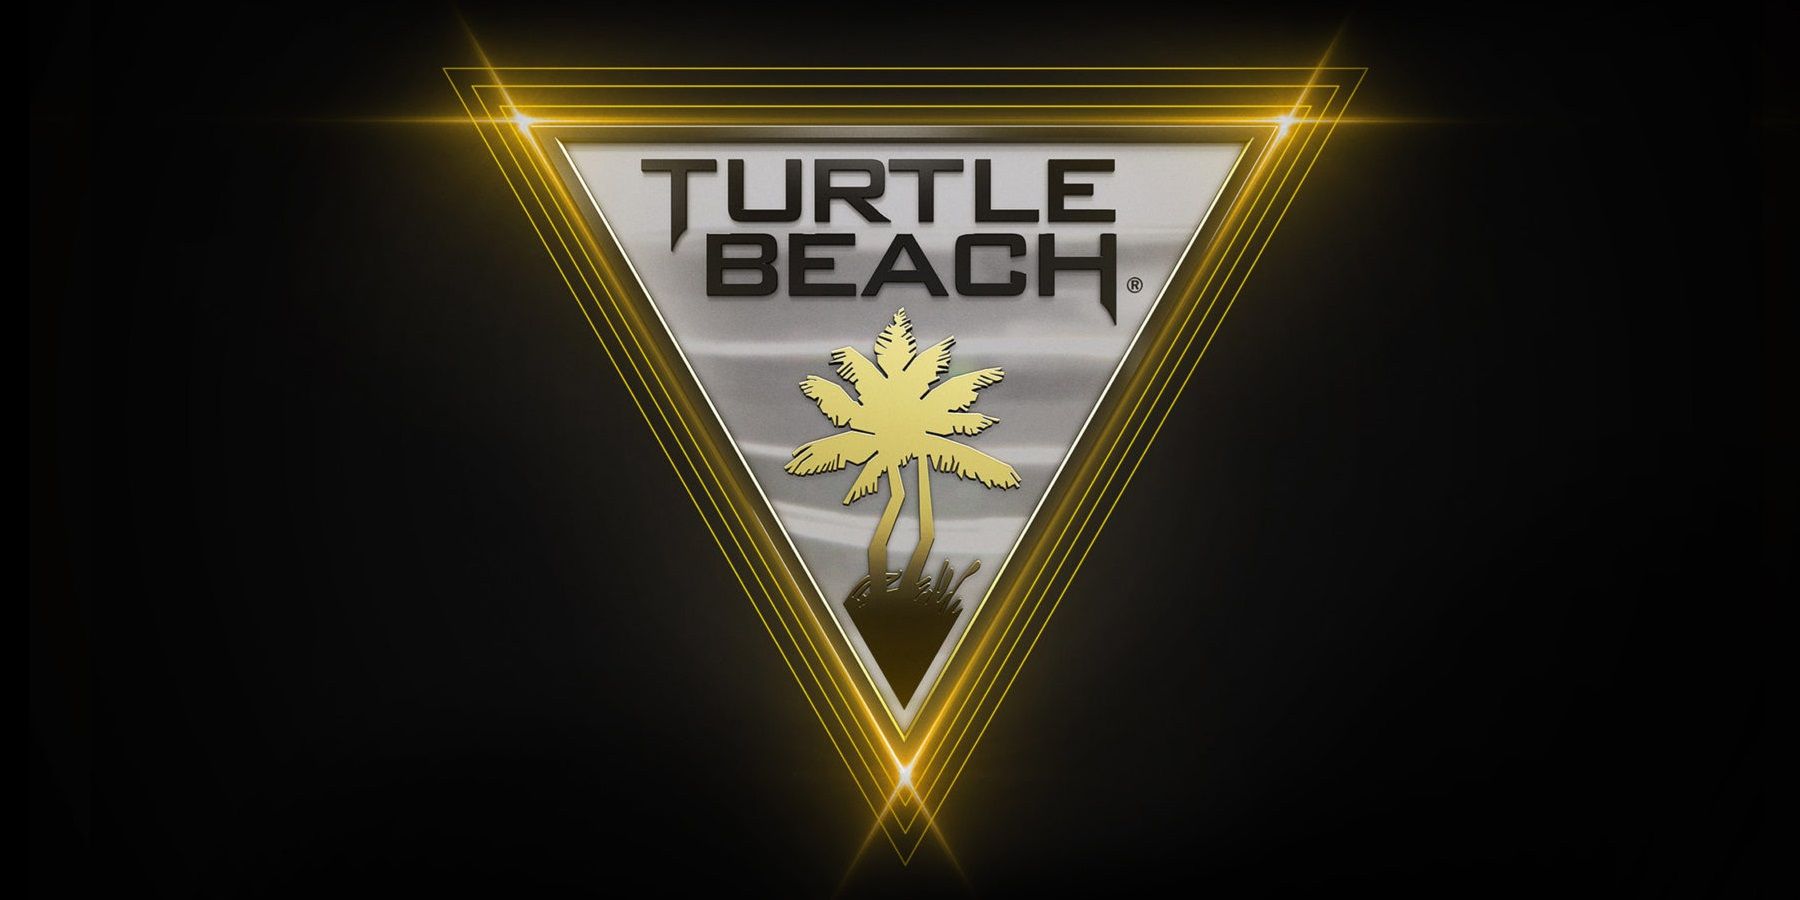 turtle-beach-logo